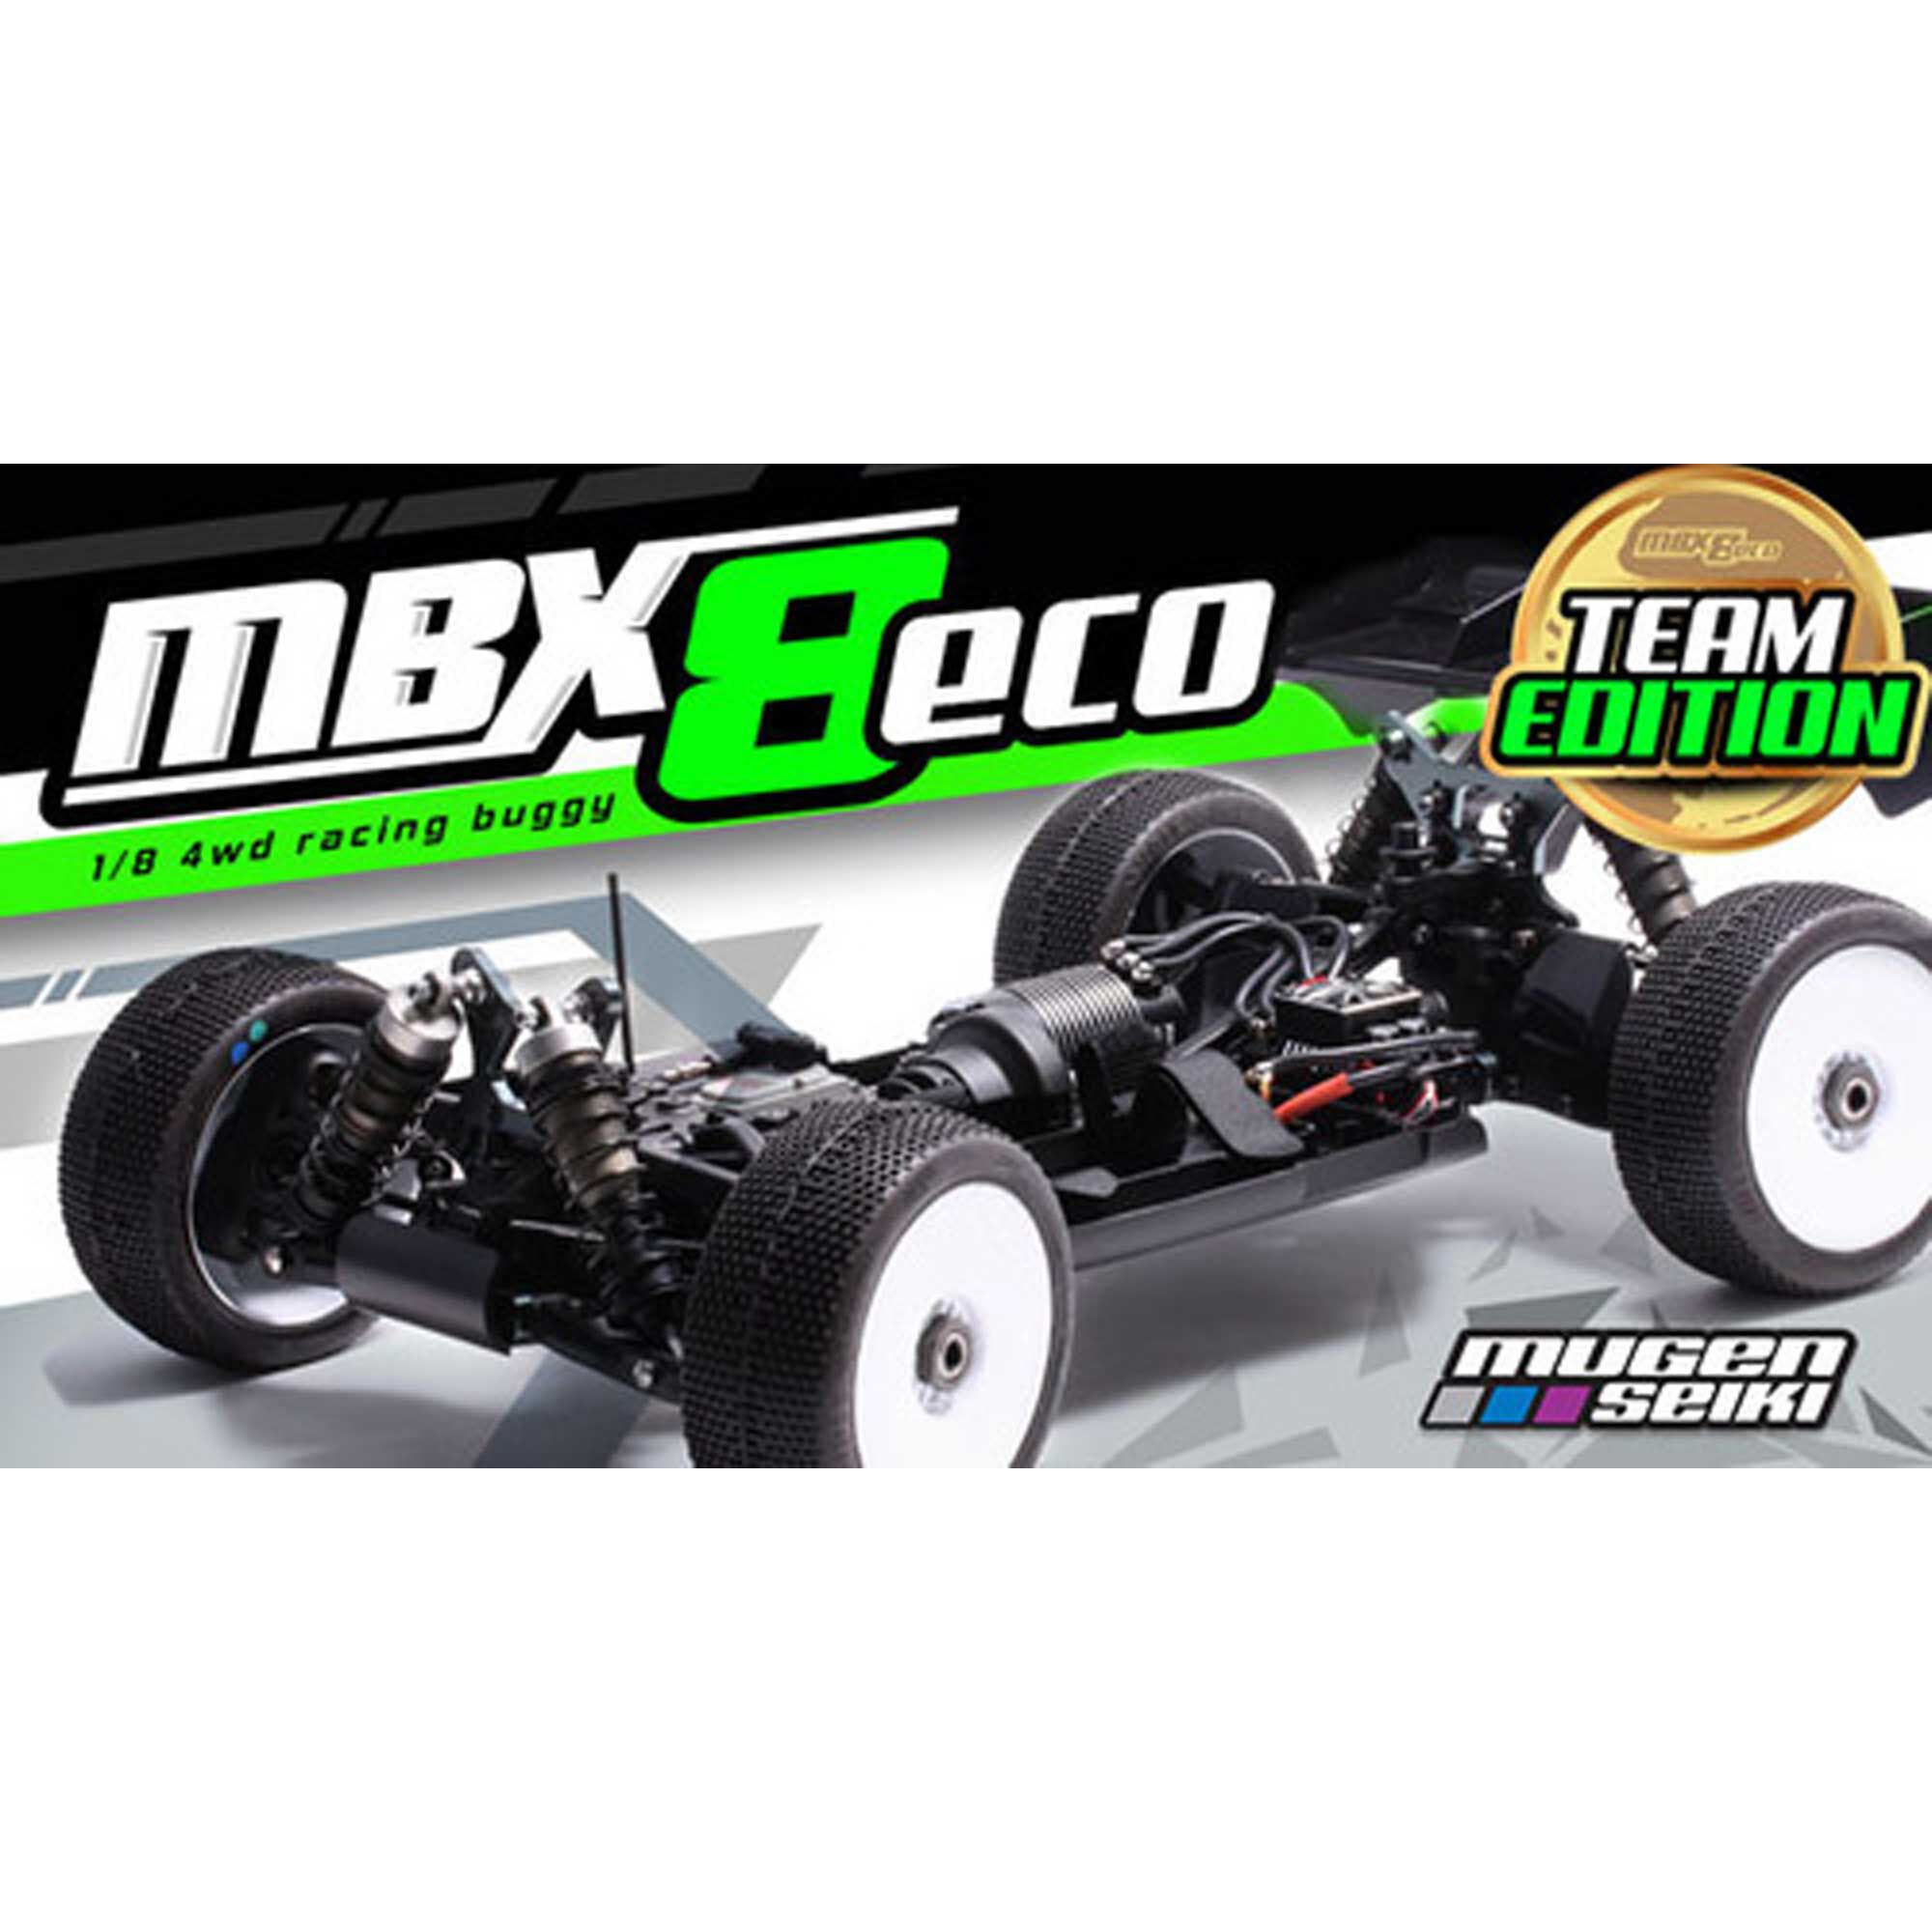 mbx8 eco